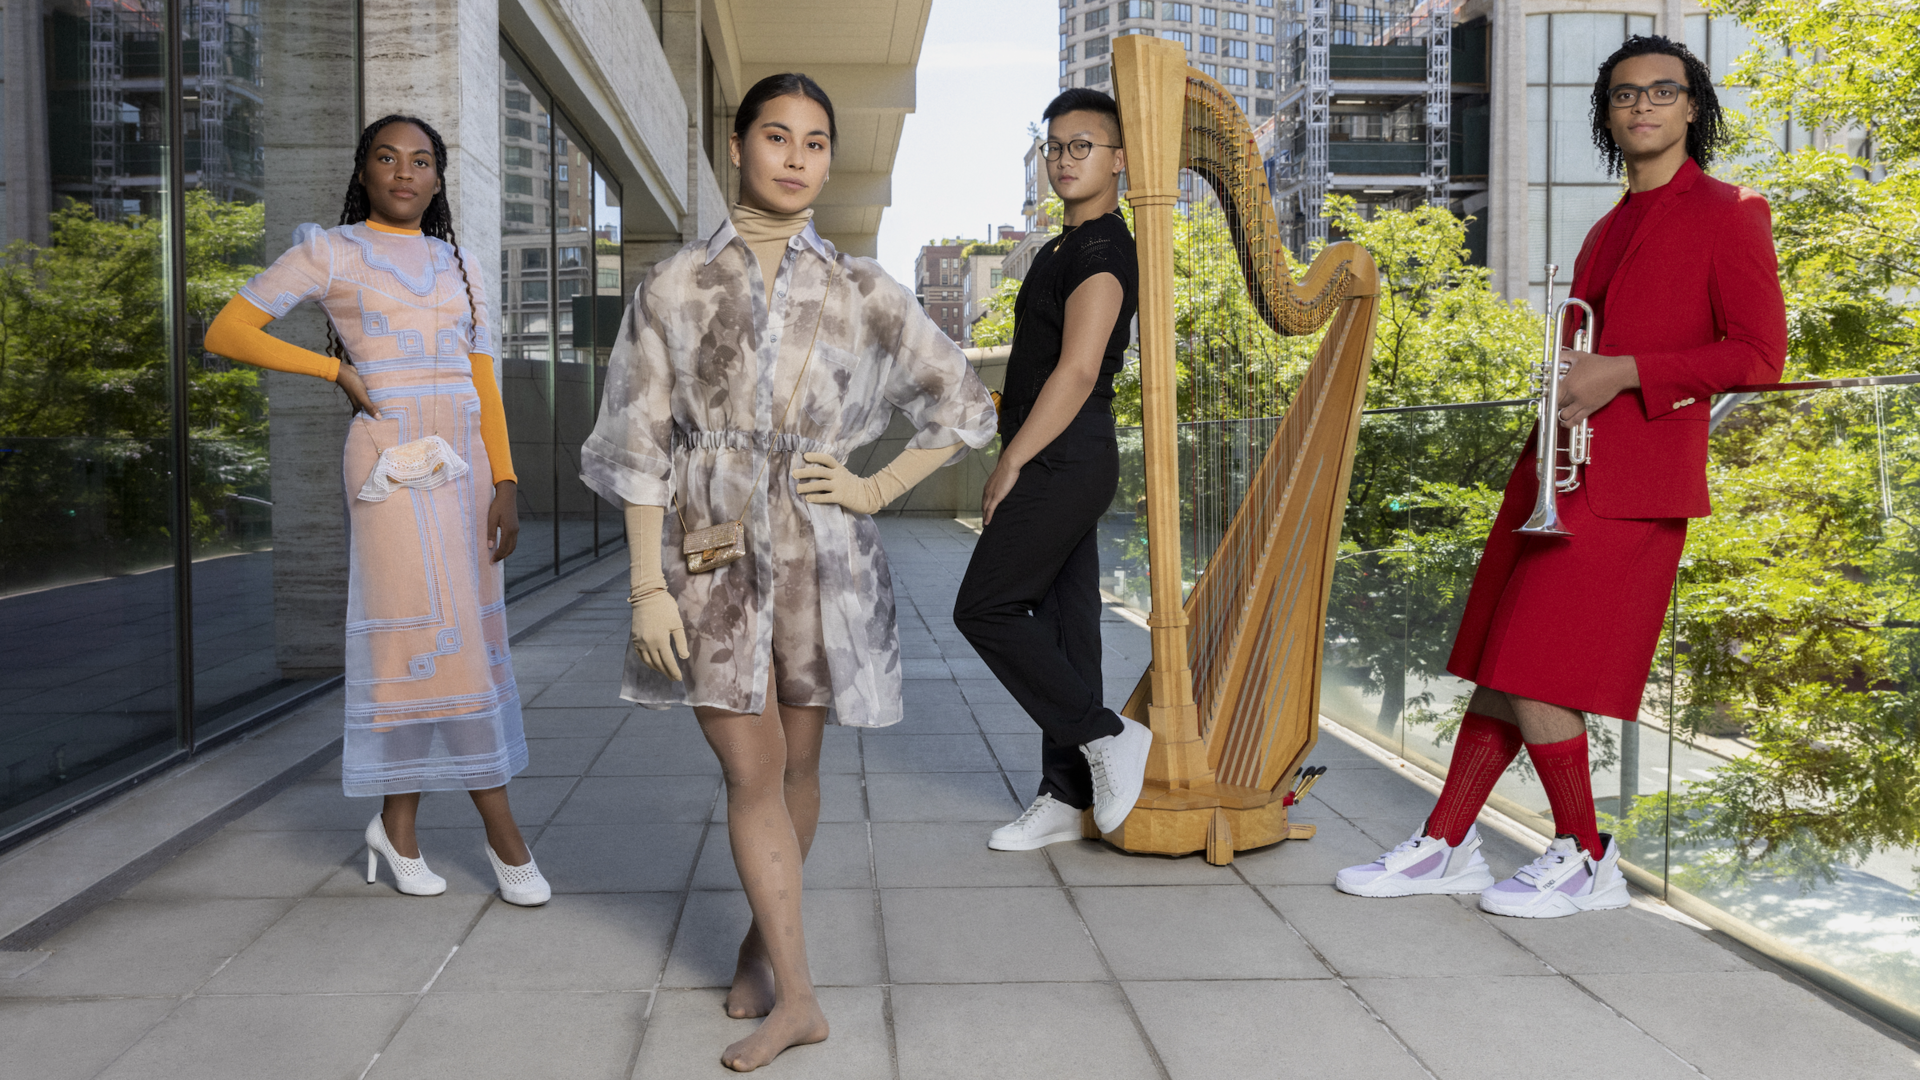 Four students pose outside wearing Fendi attire